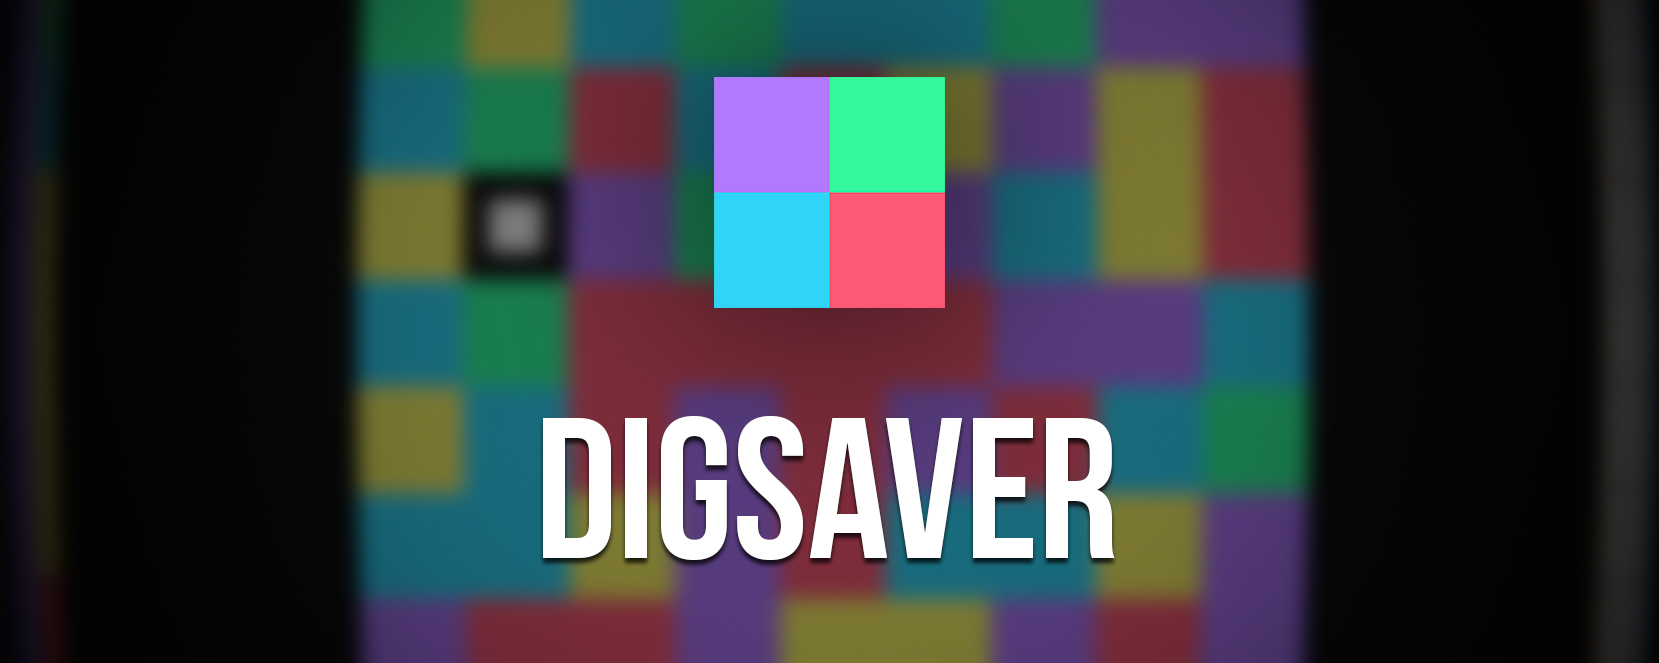 Digsaver